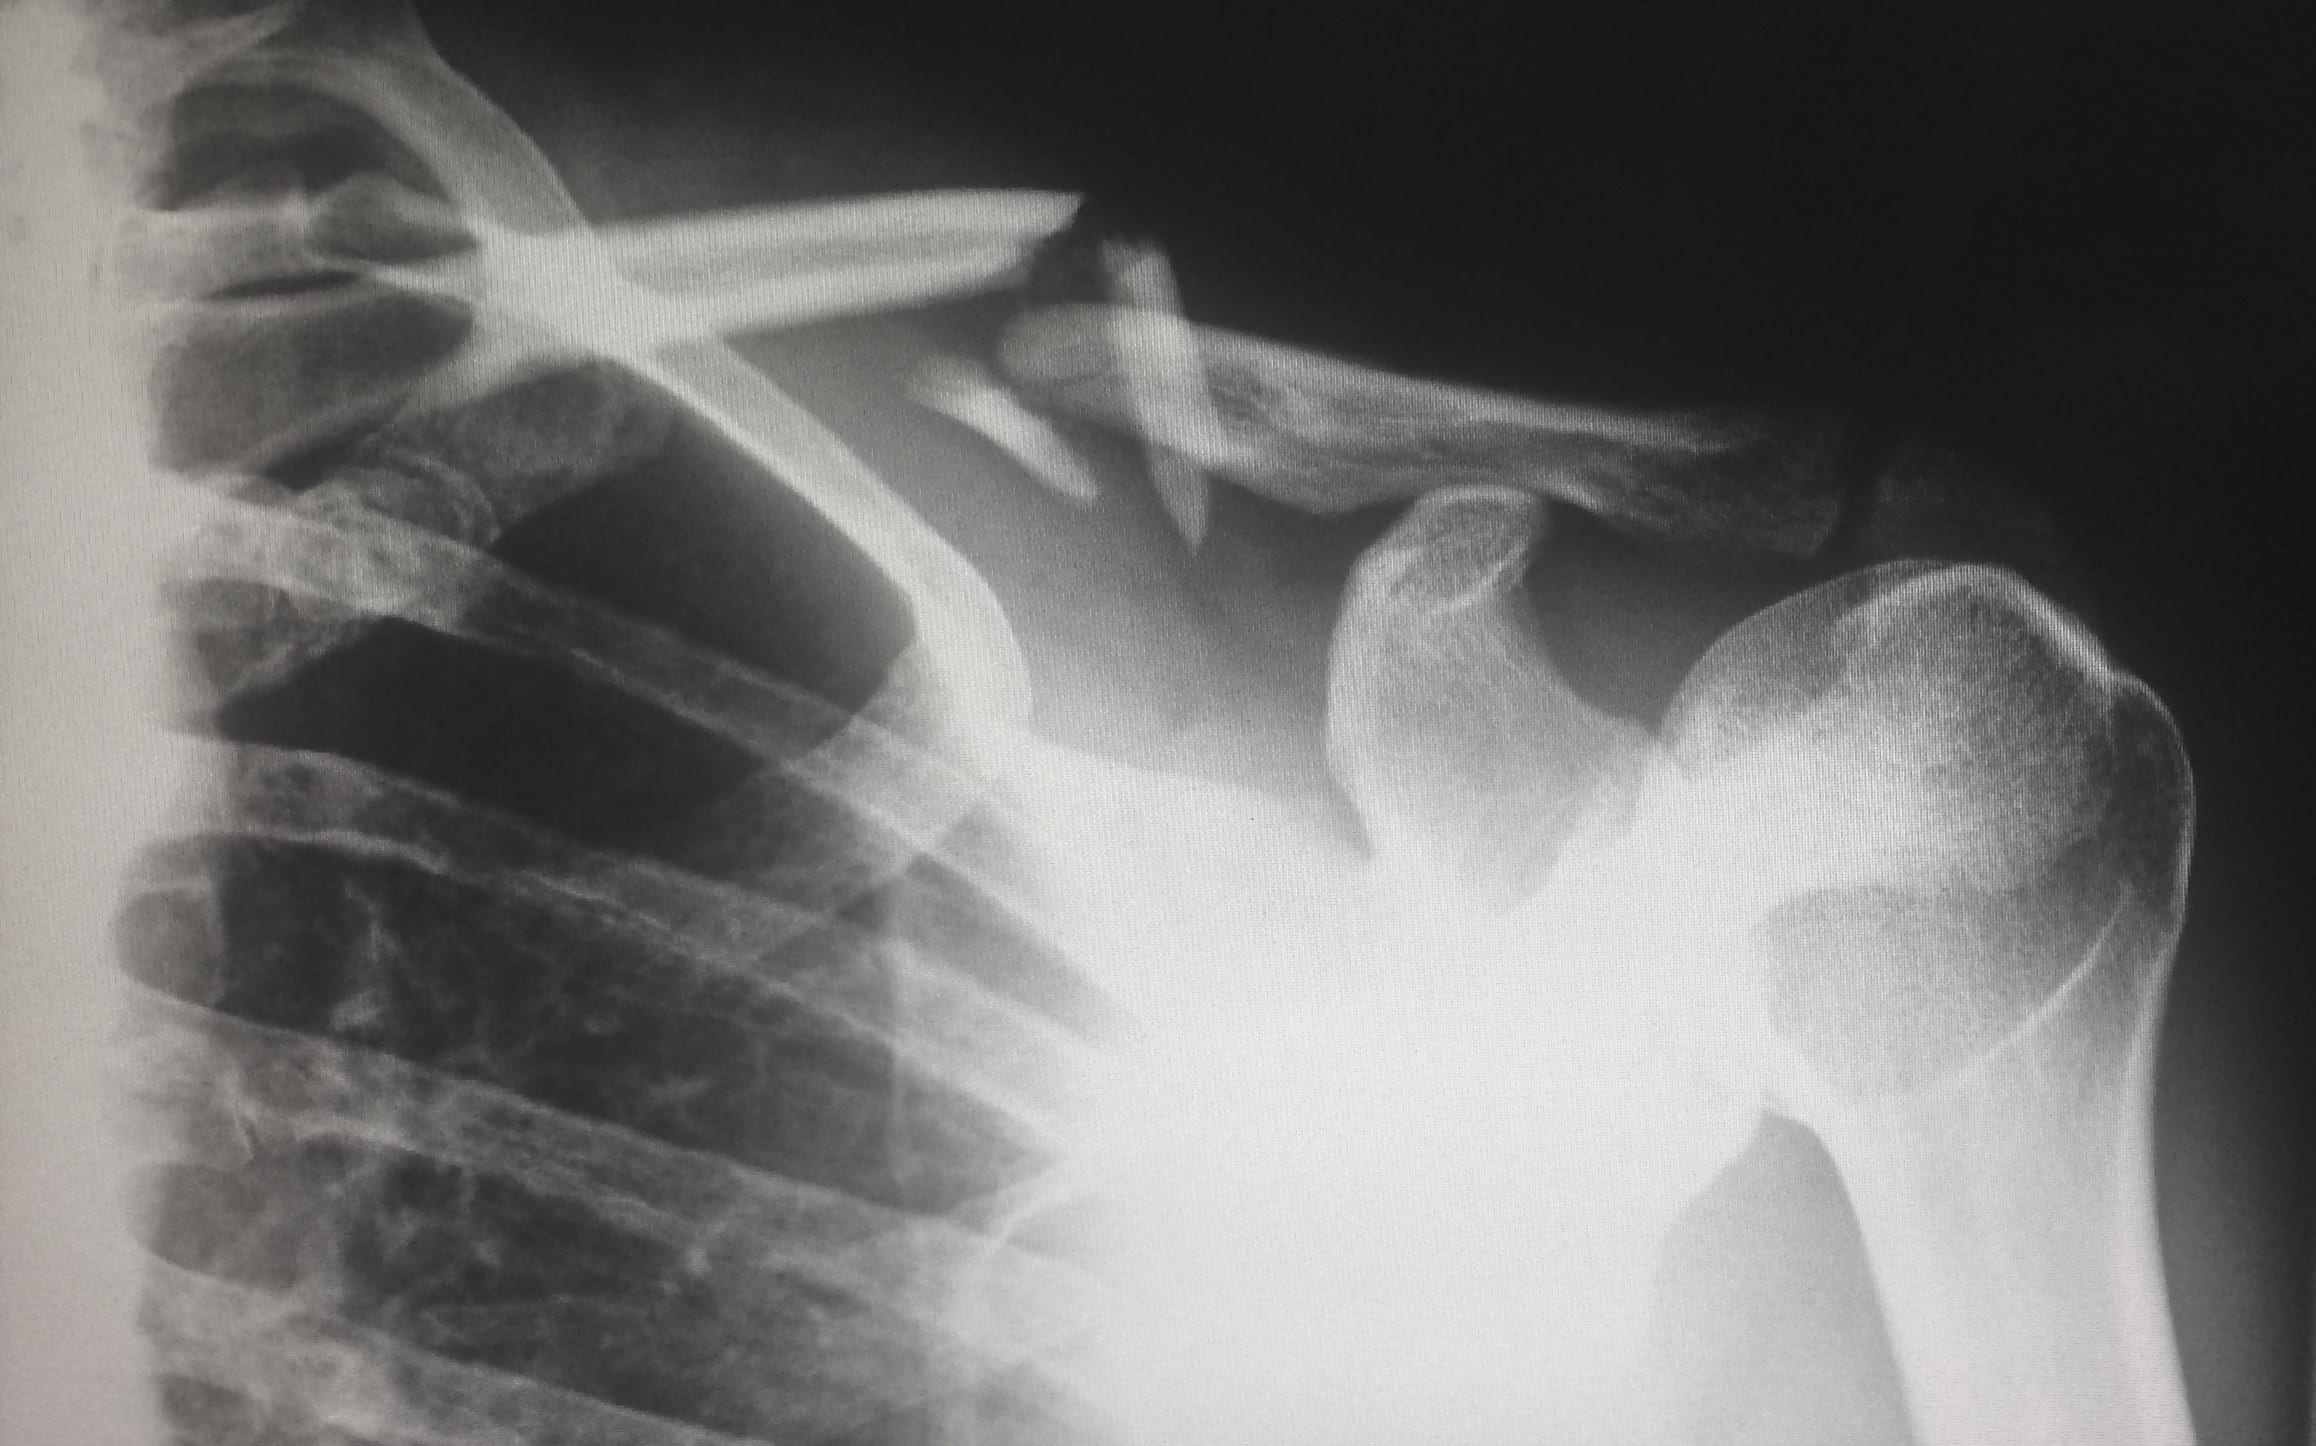 X-ray showing broken collar bone; image by Harlie Raethel, via Unsplash.com.